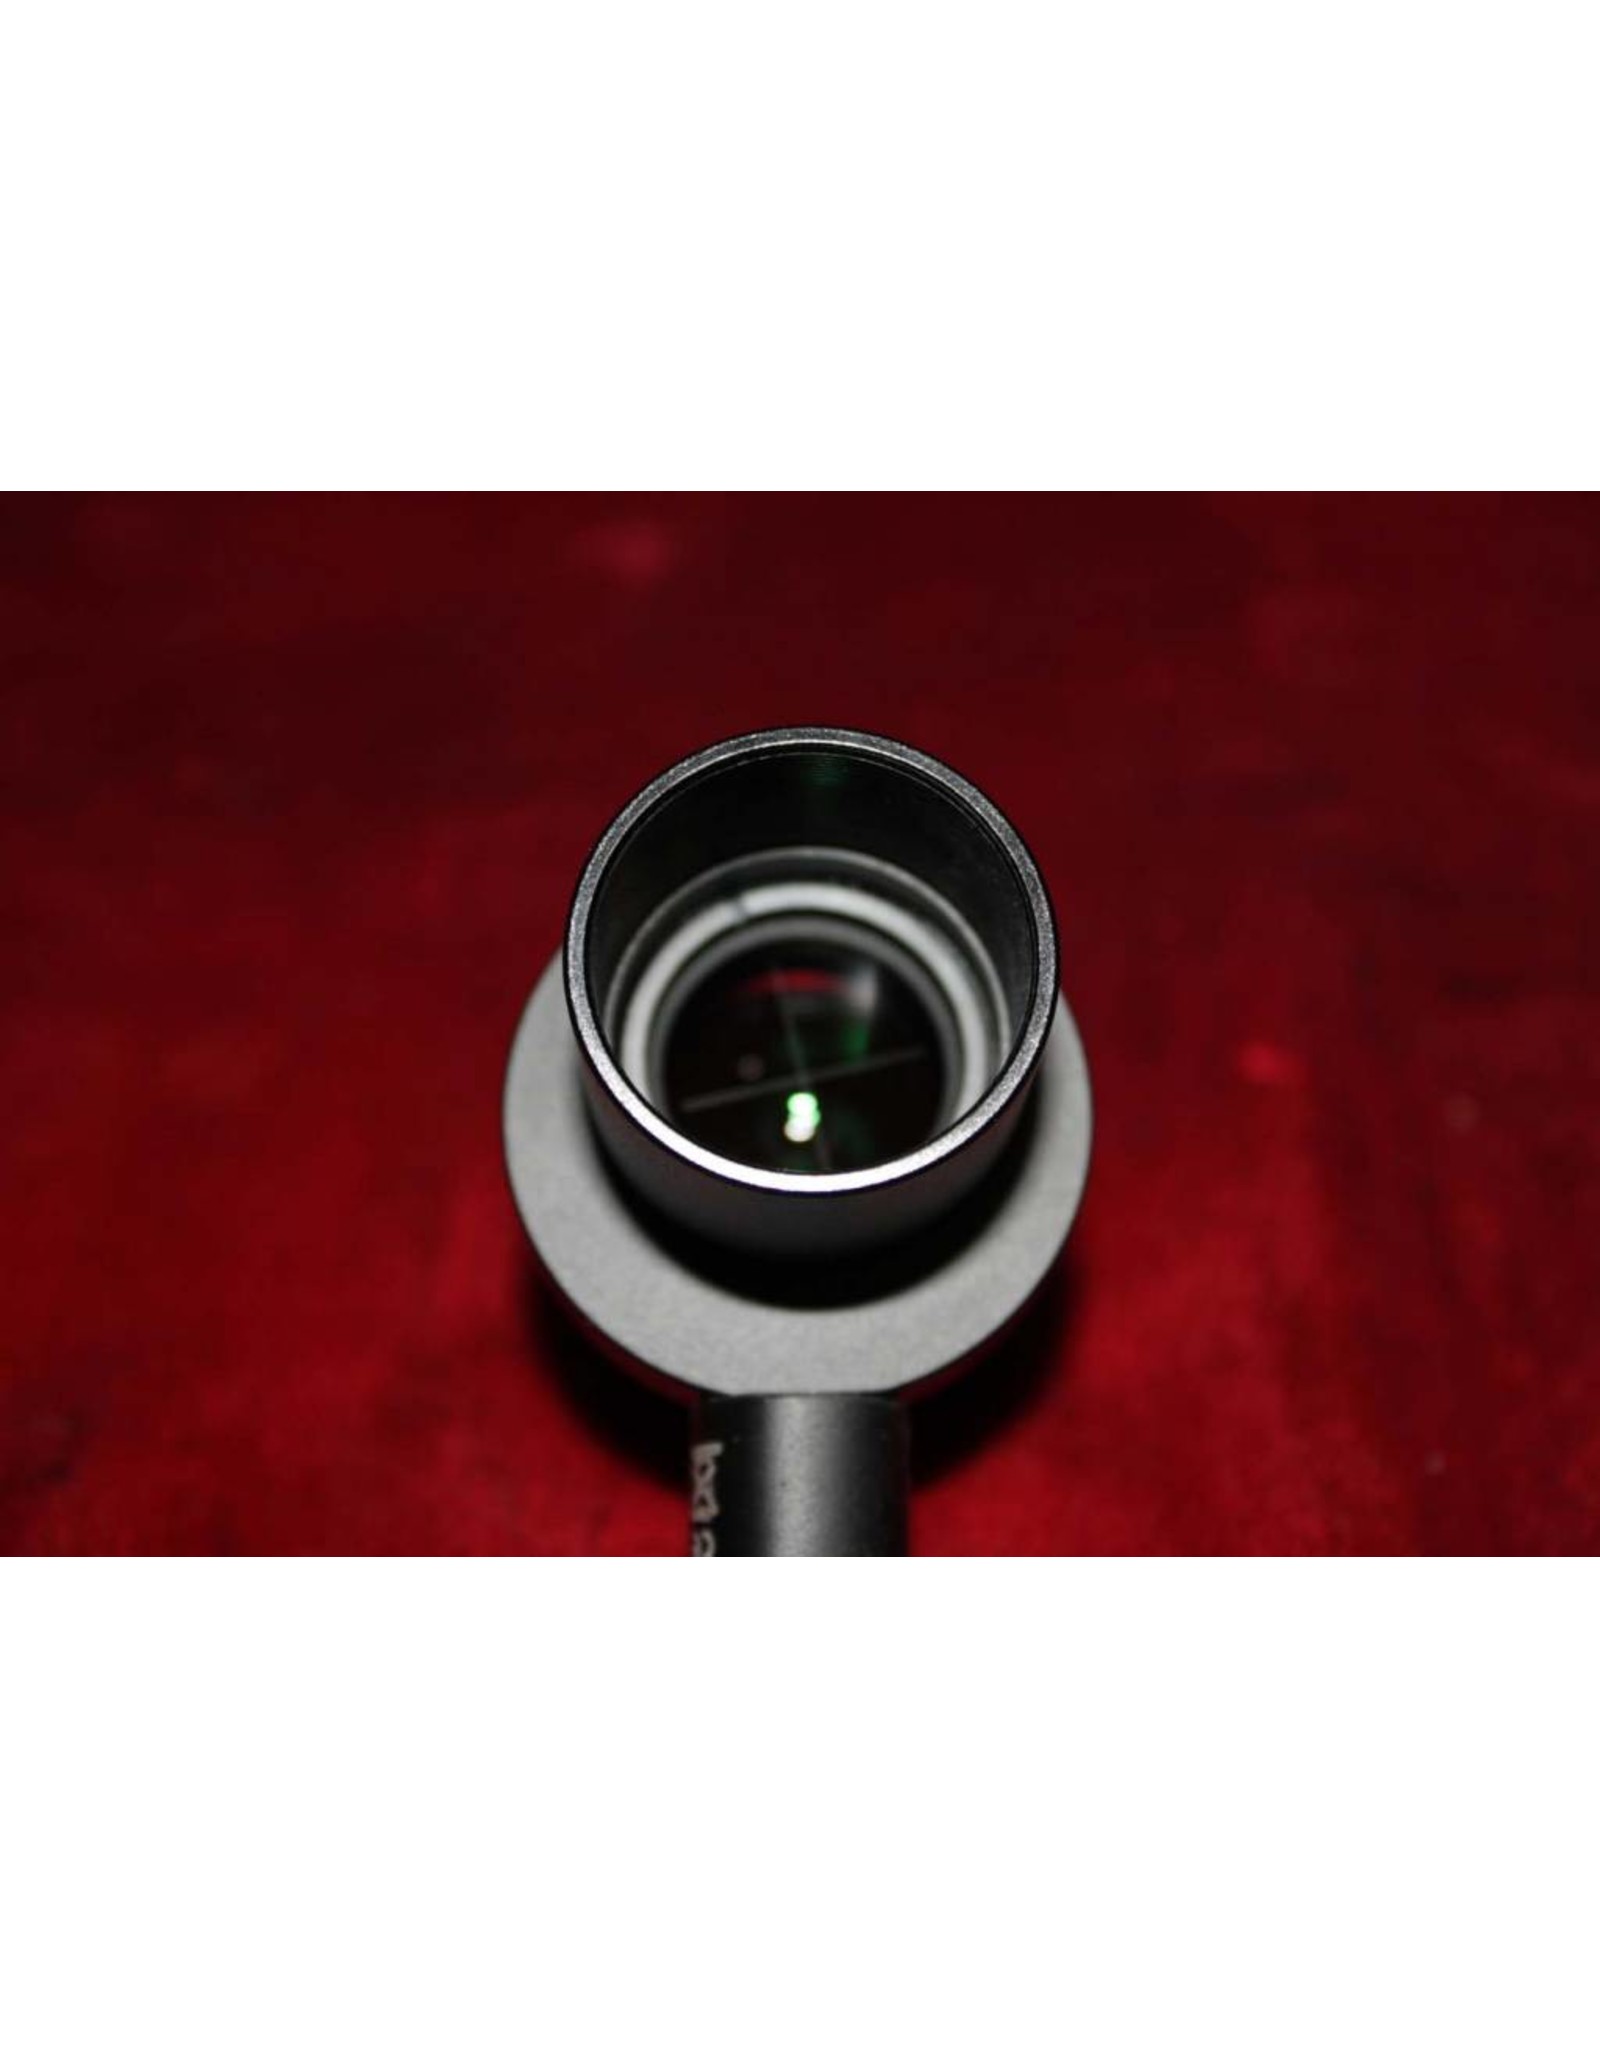 Antares Optical Antares 1.25" Illuminated Reticle Kellner Eyepiece - 27mm FREE upgrade includes Rigel Pulseguide Illuminator!